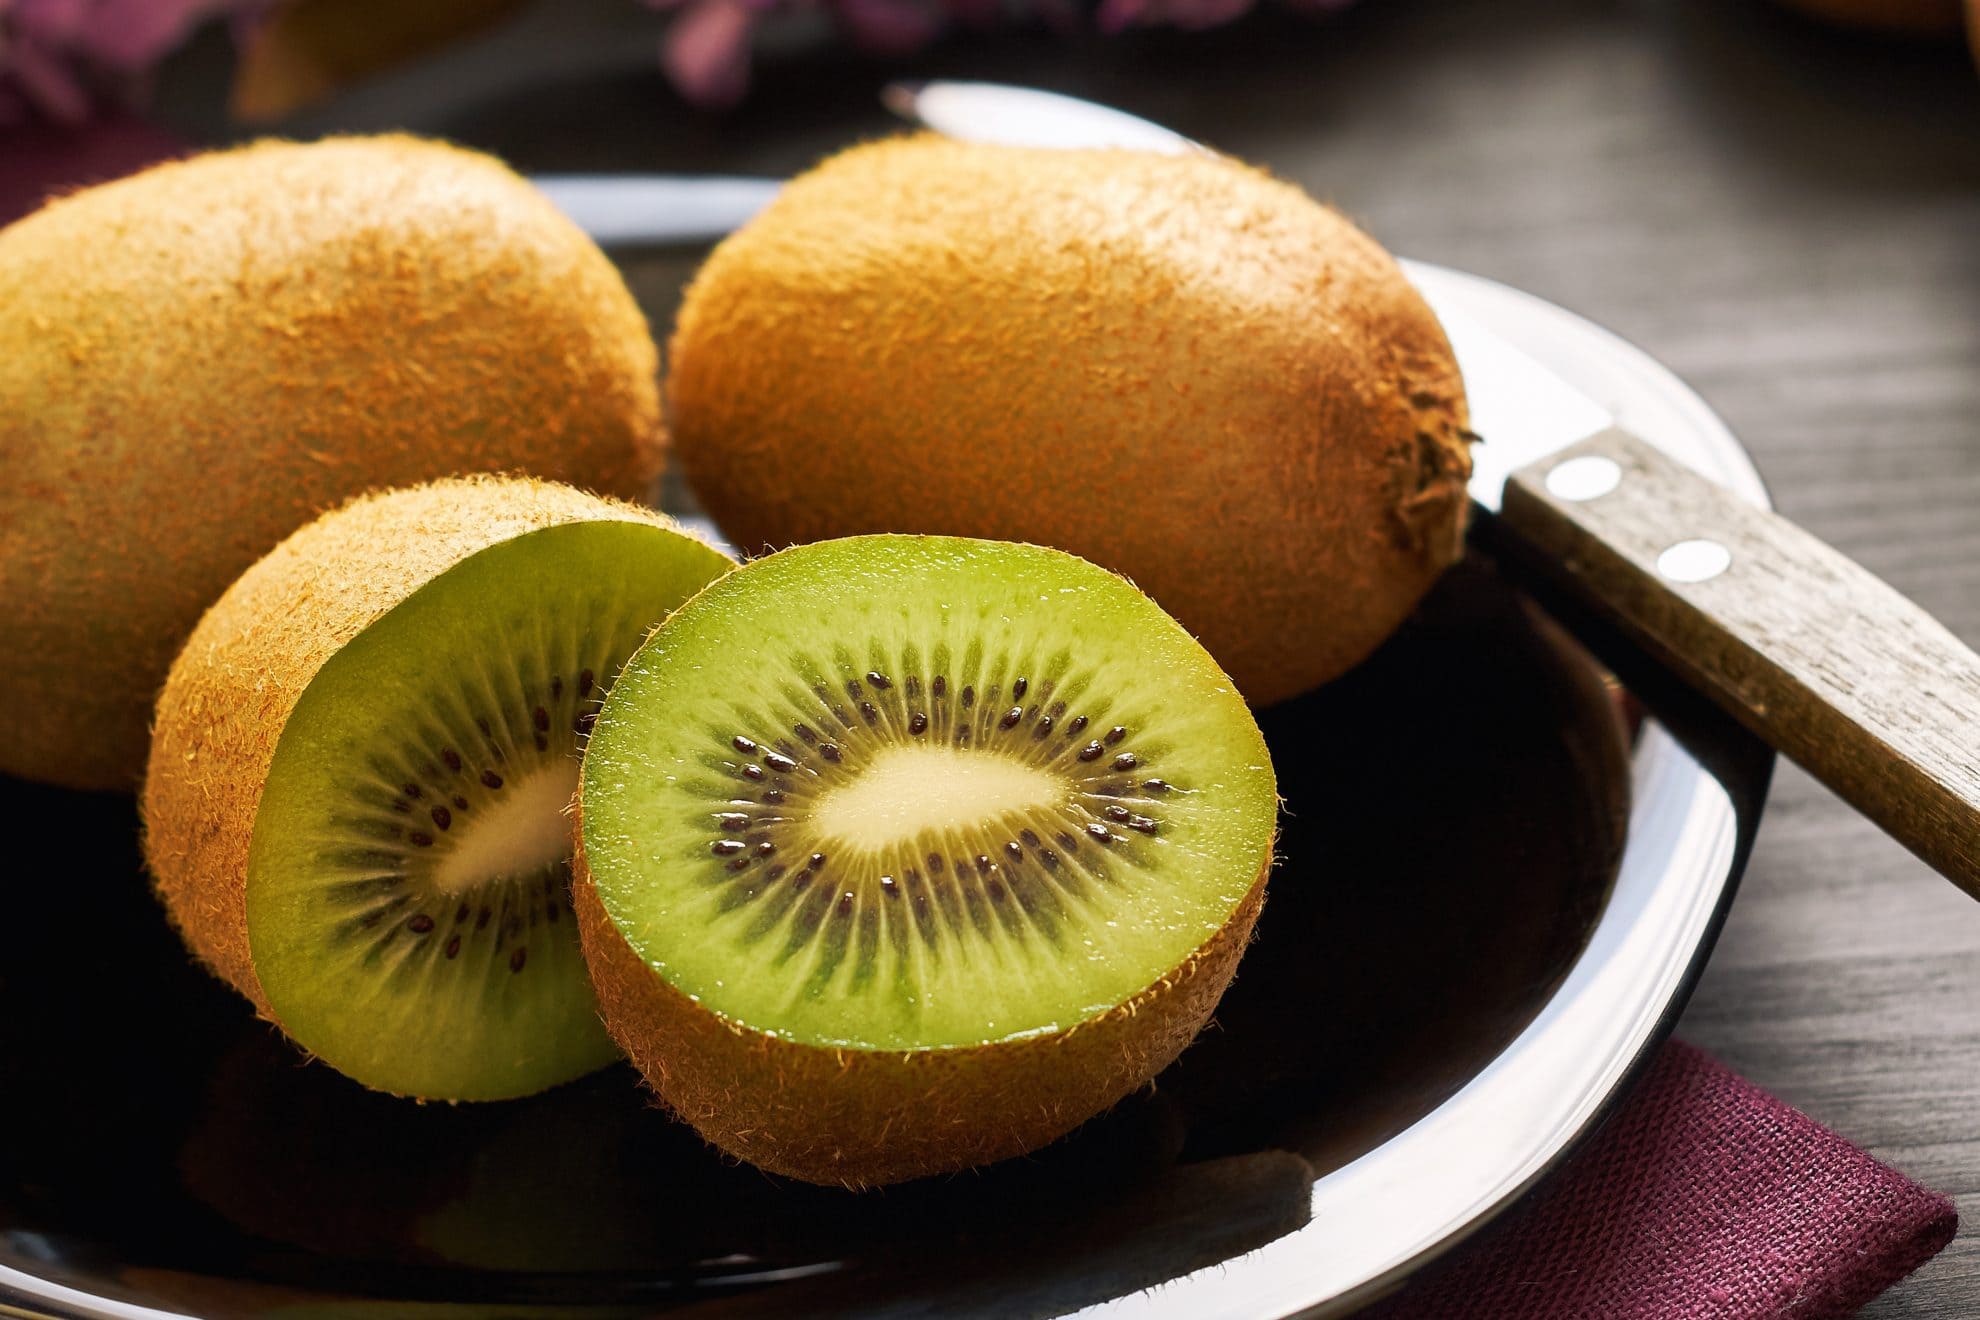 Surprising Origins Of the Kiwi Fruit